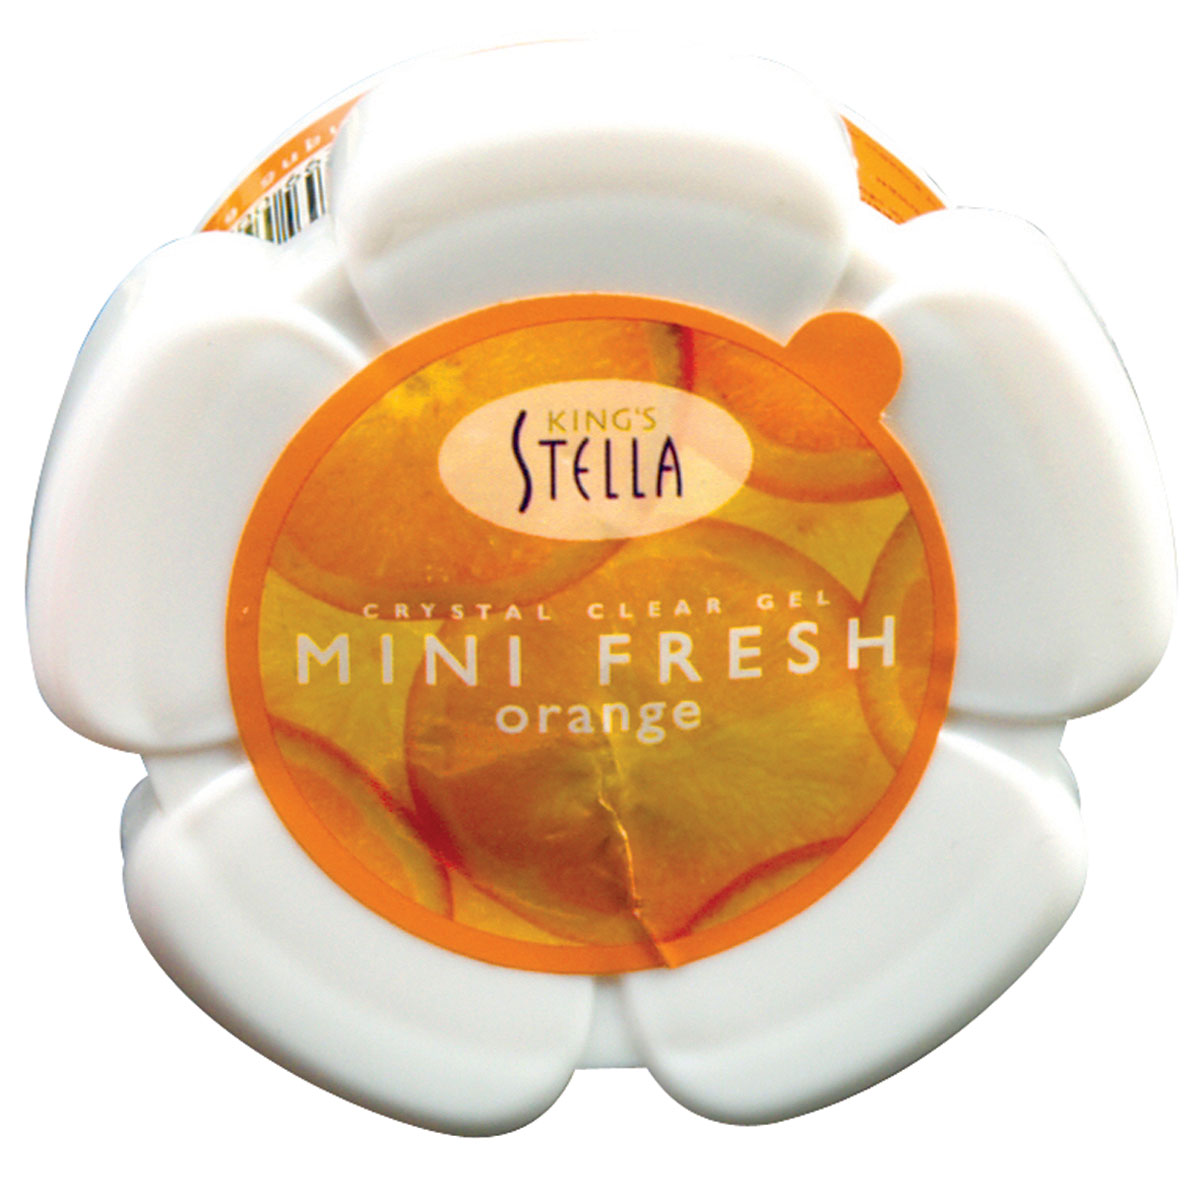 King Stella Mini Fresh Air Freshening Gel Orange 50g.×Pack6 คิงส์สเตลล่า มินิเฟรช เจลปรับอากาศกลิ่นส้ม 50กรัม×แพ็ค6 1